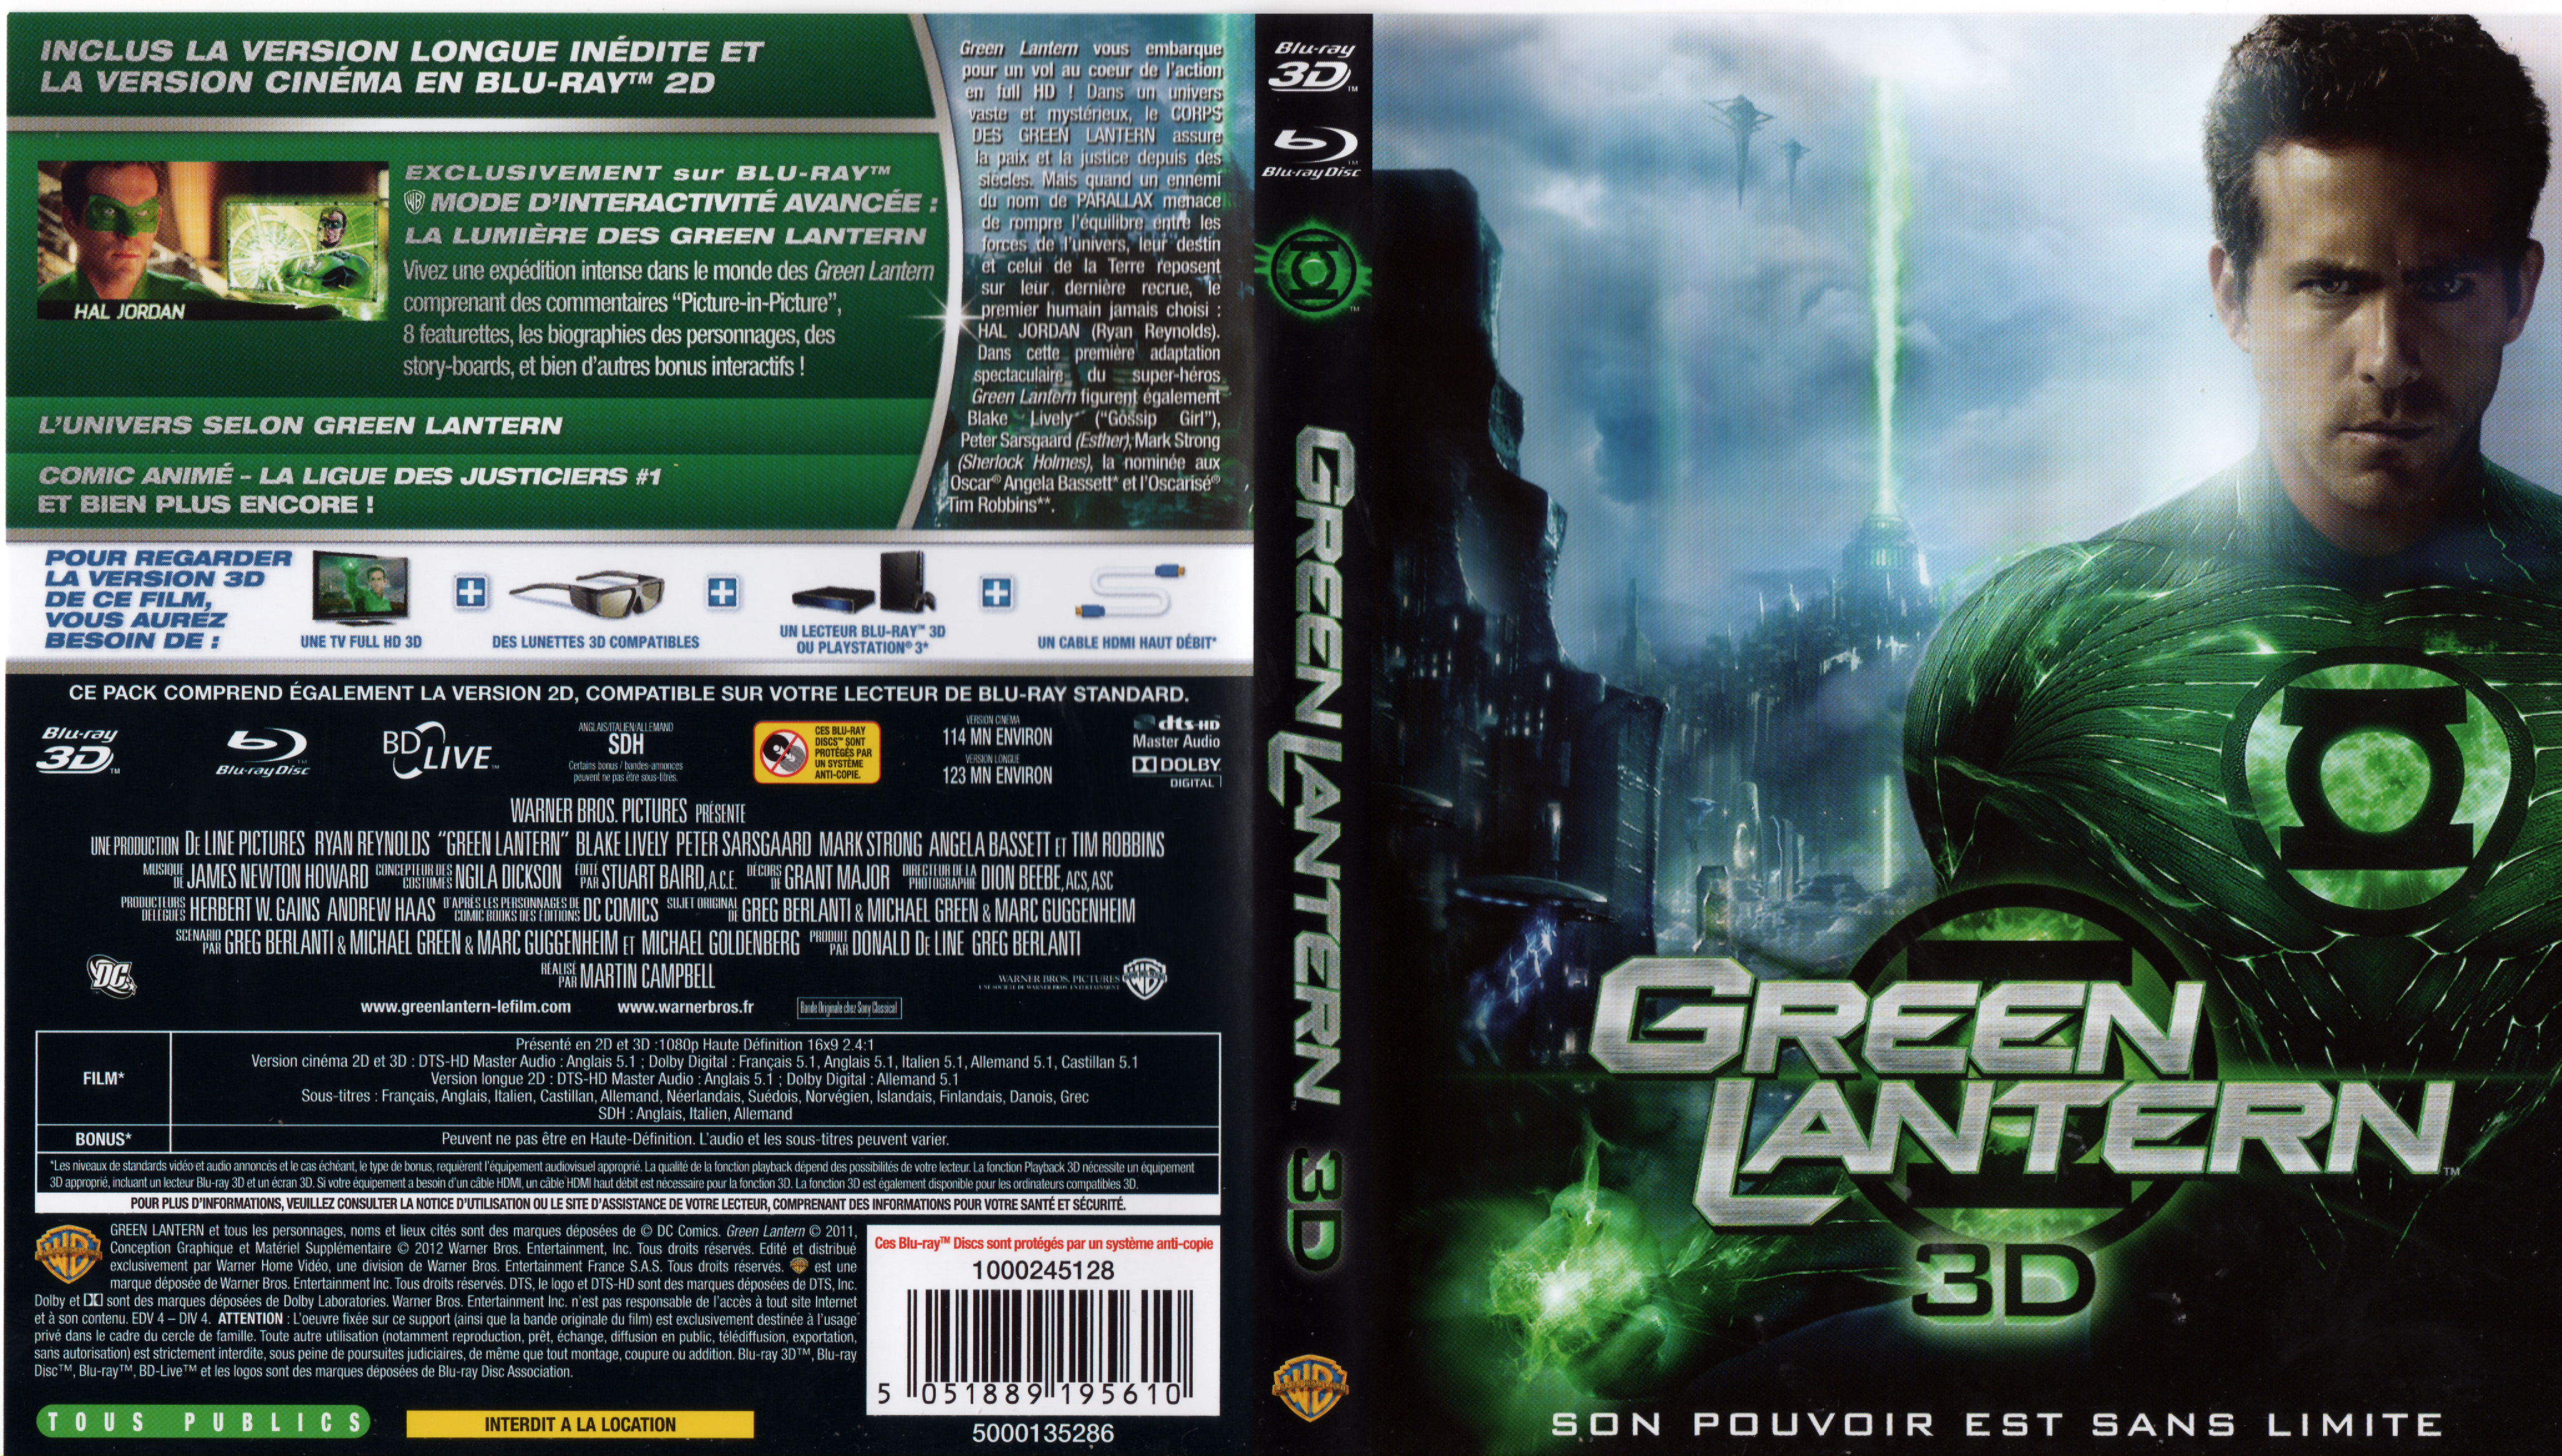 Jaquette DVD Green Lantern 3D (BLU-RAY)